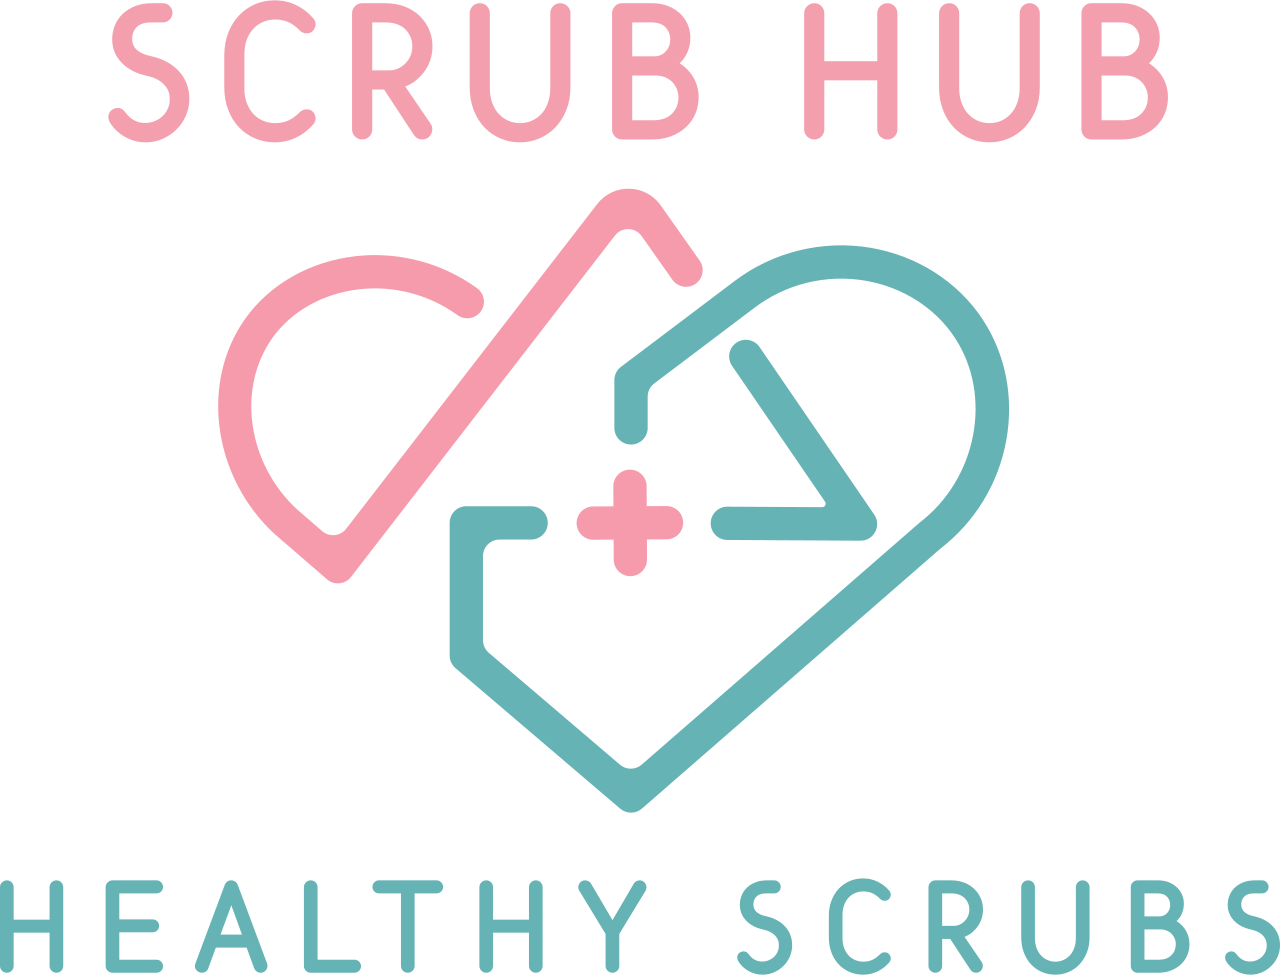 Scrub hub's logo